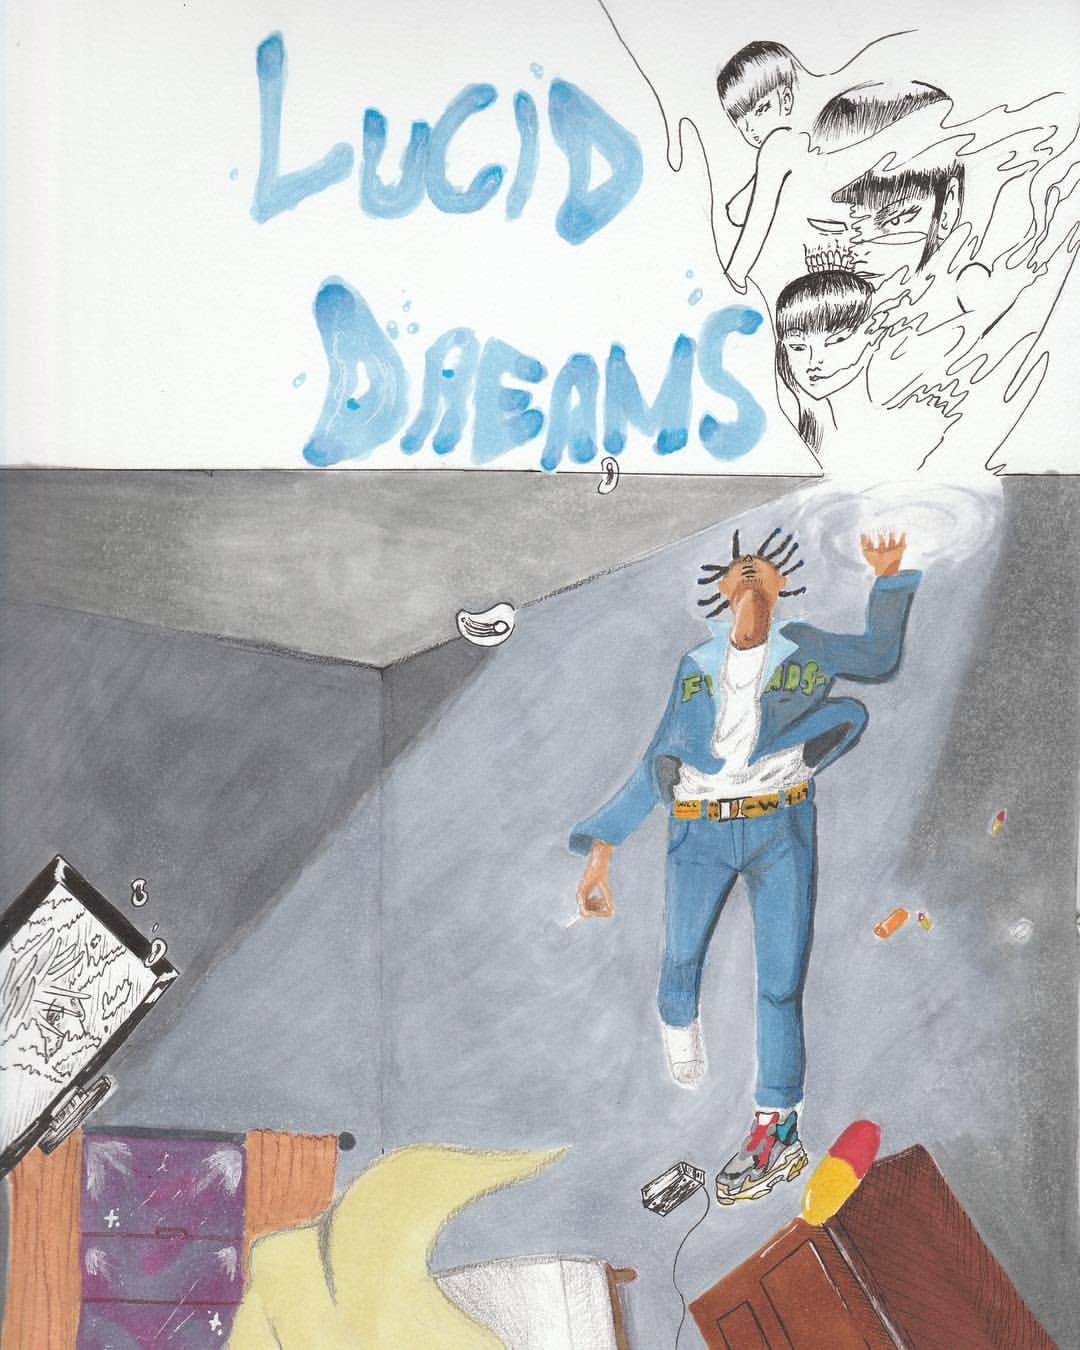 Juice wrld lucid dreams poster. Lucid dreams song, Lucid